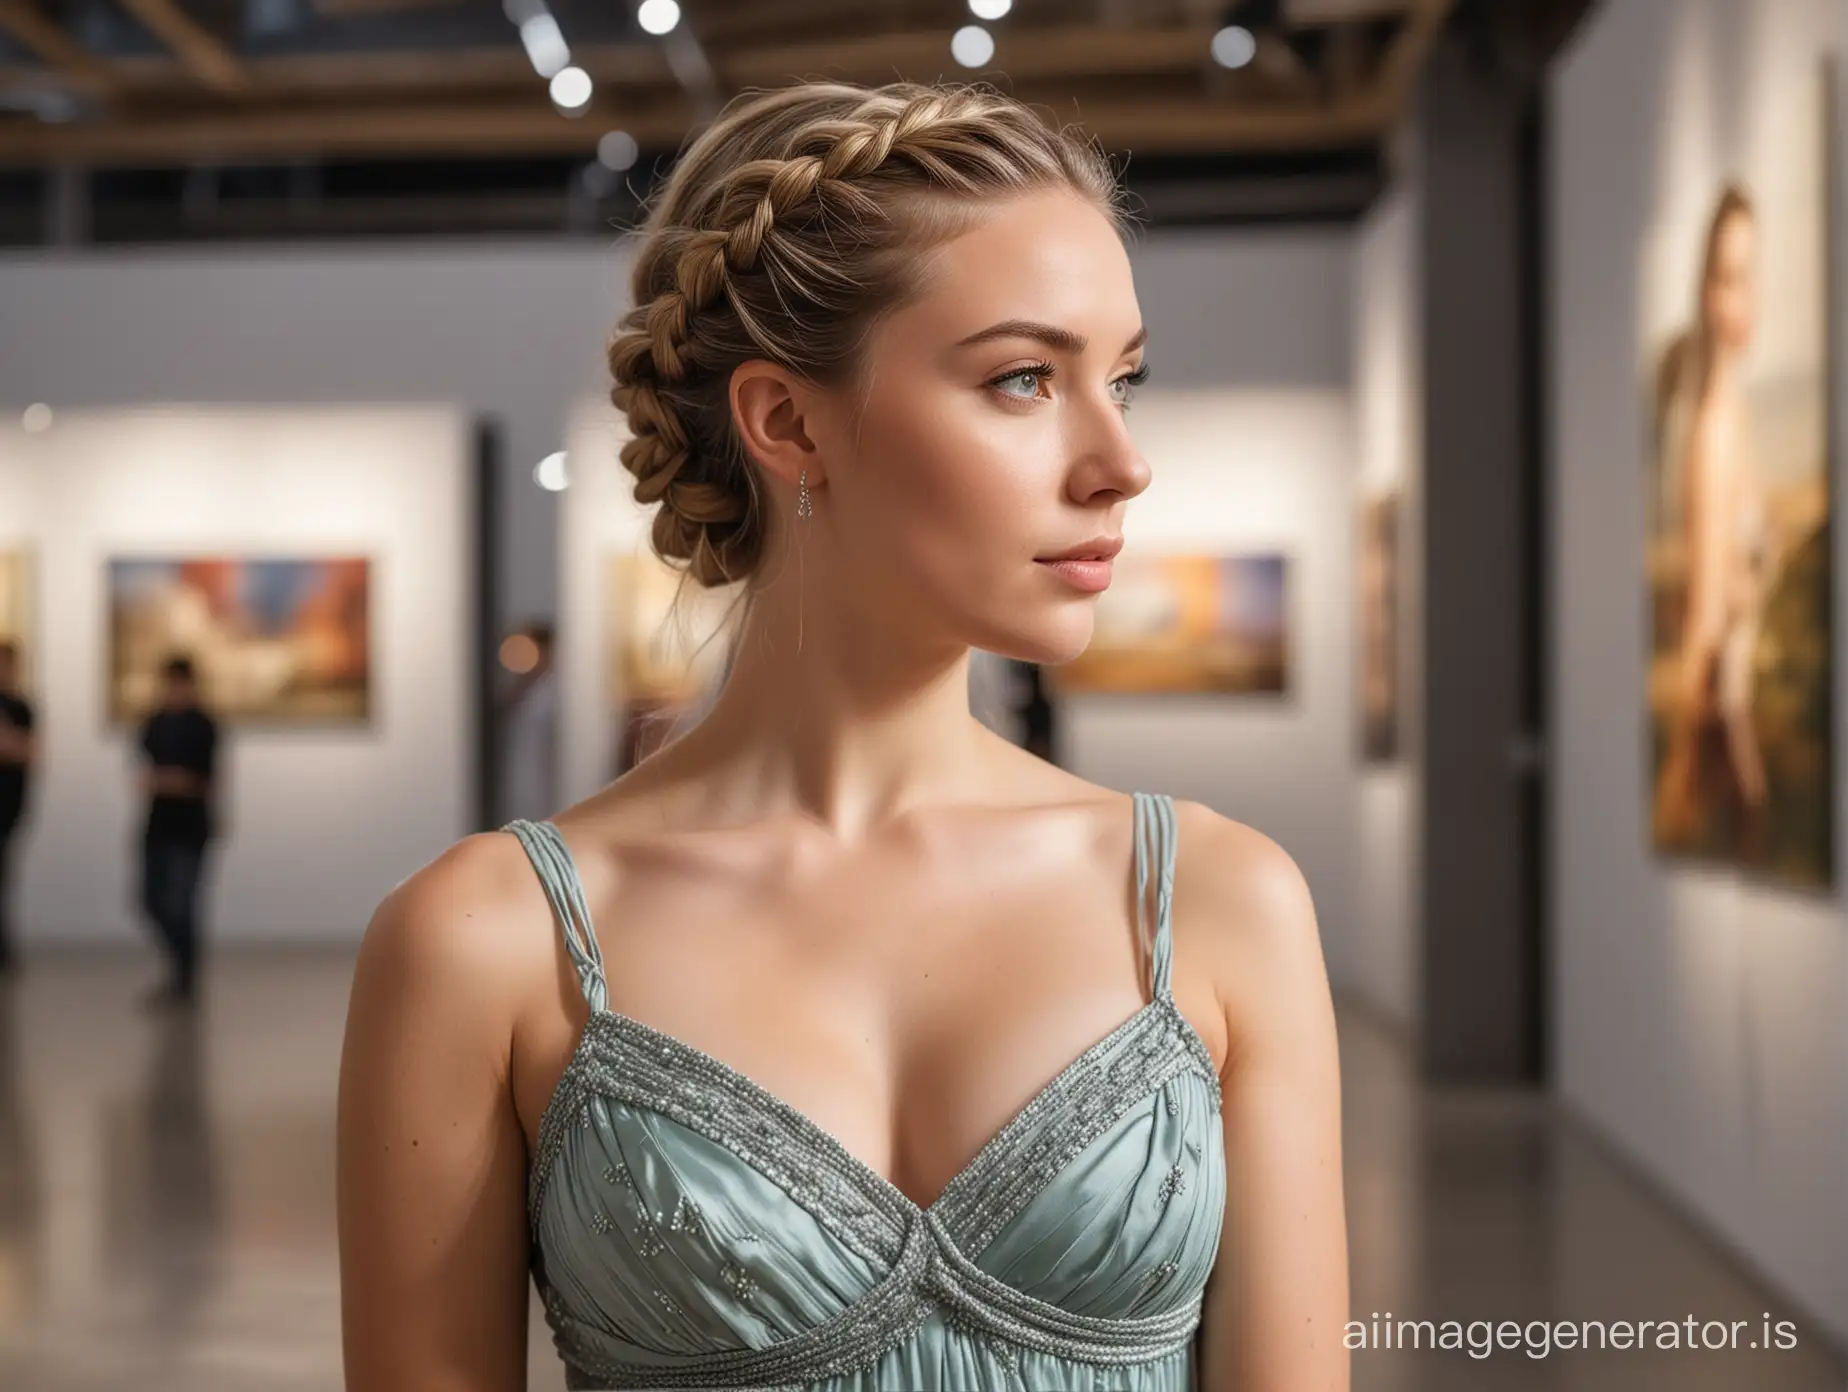 Elegant-Woman-with-Braided-Hair-Admiring-Landscape-Art-in-Modern-Exhibition-Hall